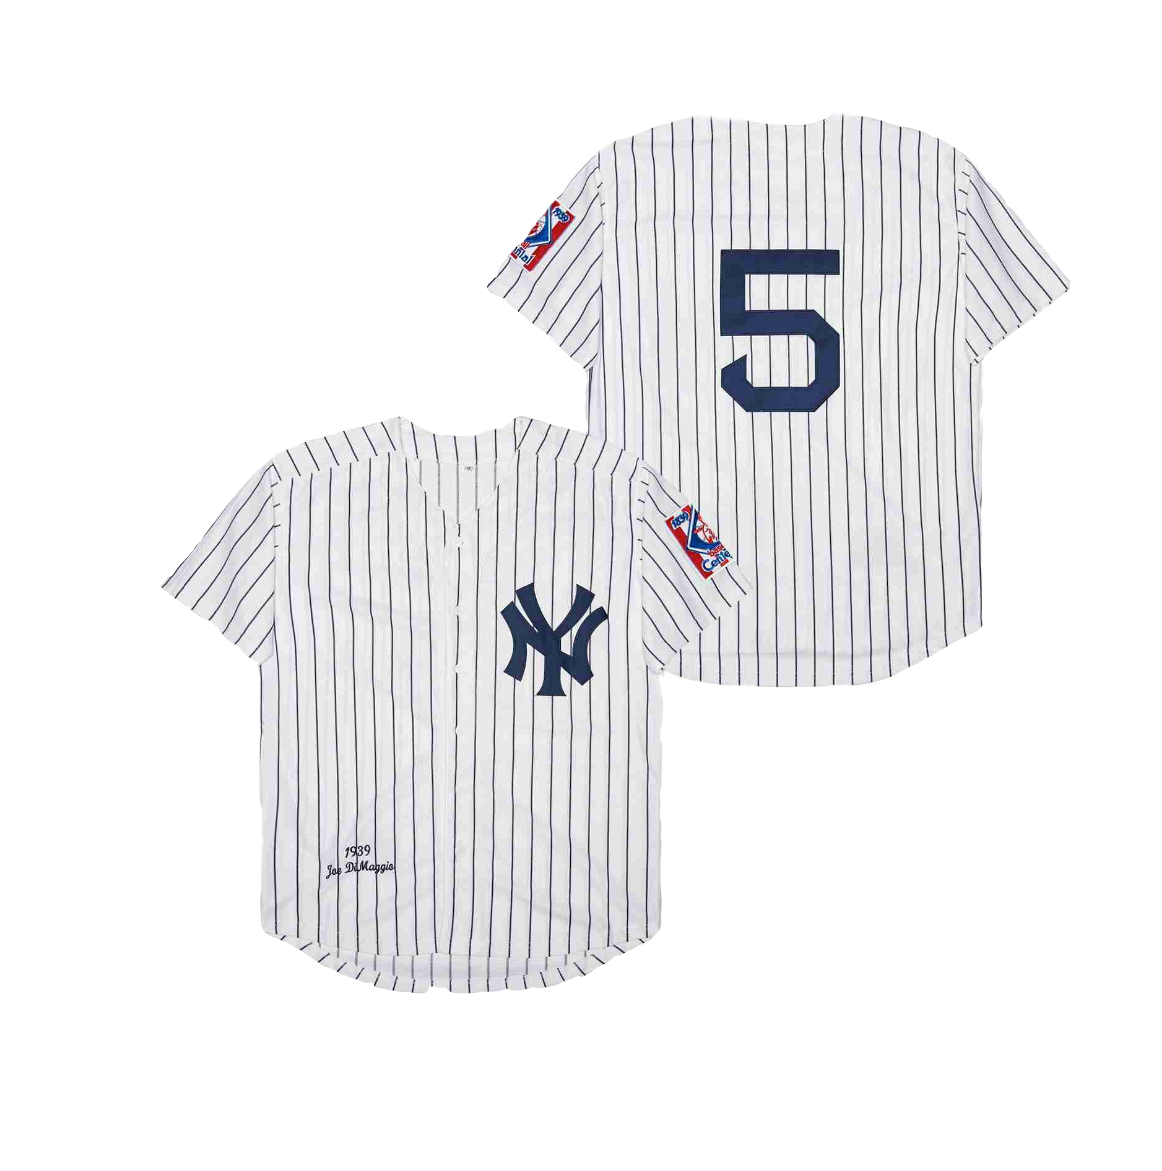 New York Yankees - The Legendary Pinstripes - New York Yankees